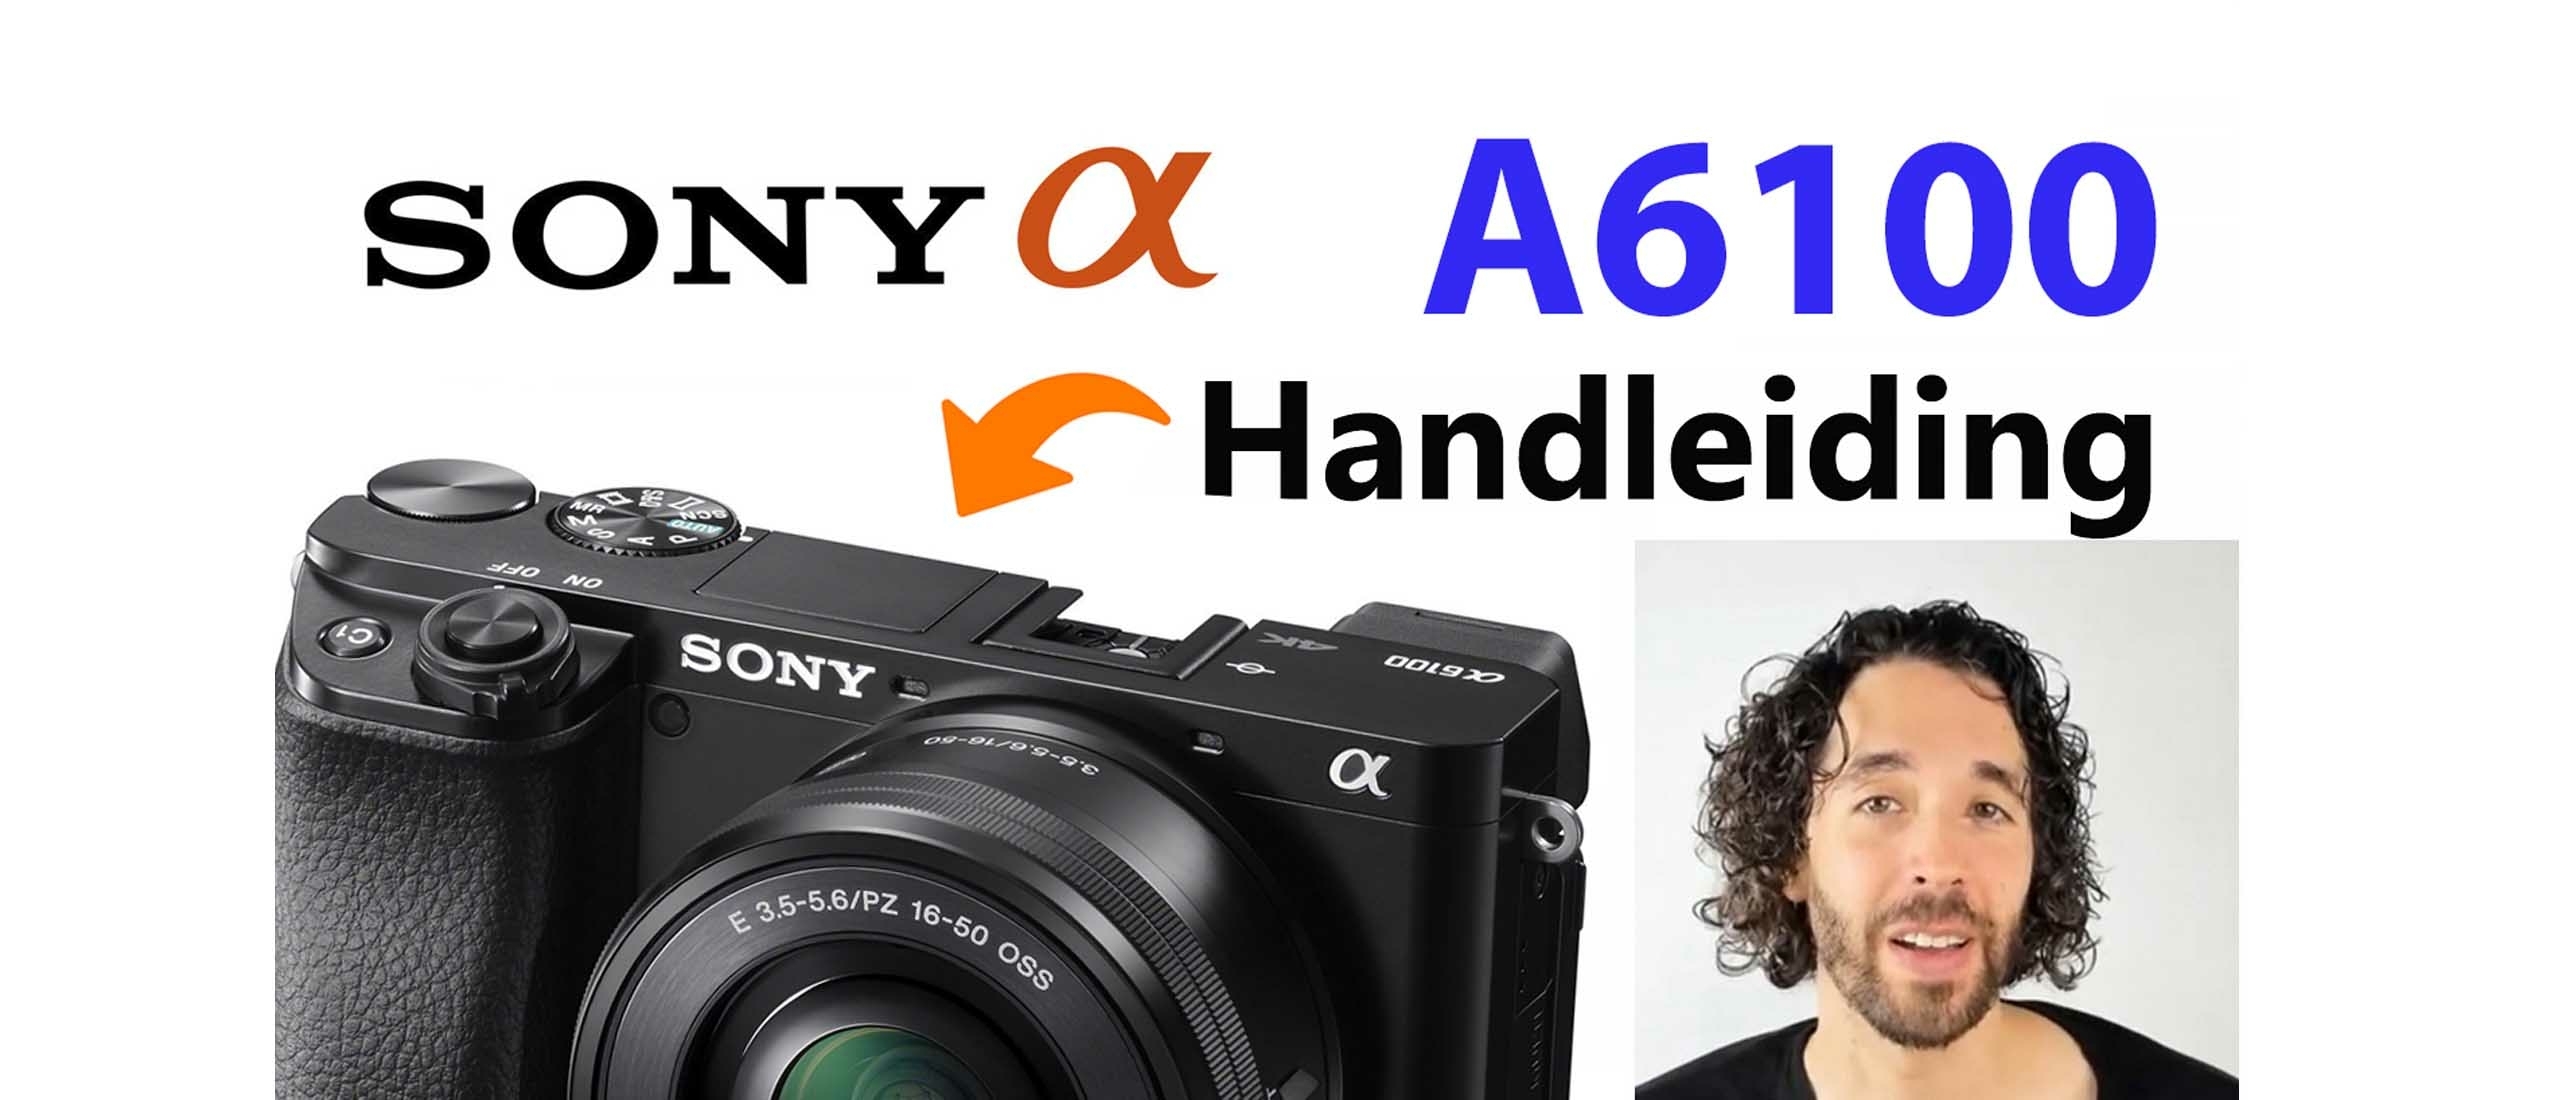 Sony A6100 Systeemcamera Handleiding Video: Menu, Functies, Knoppen & Instellingen uitgelegd